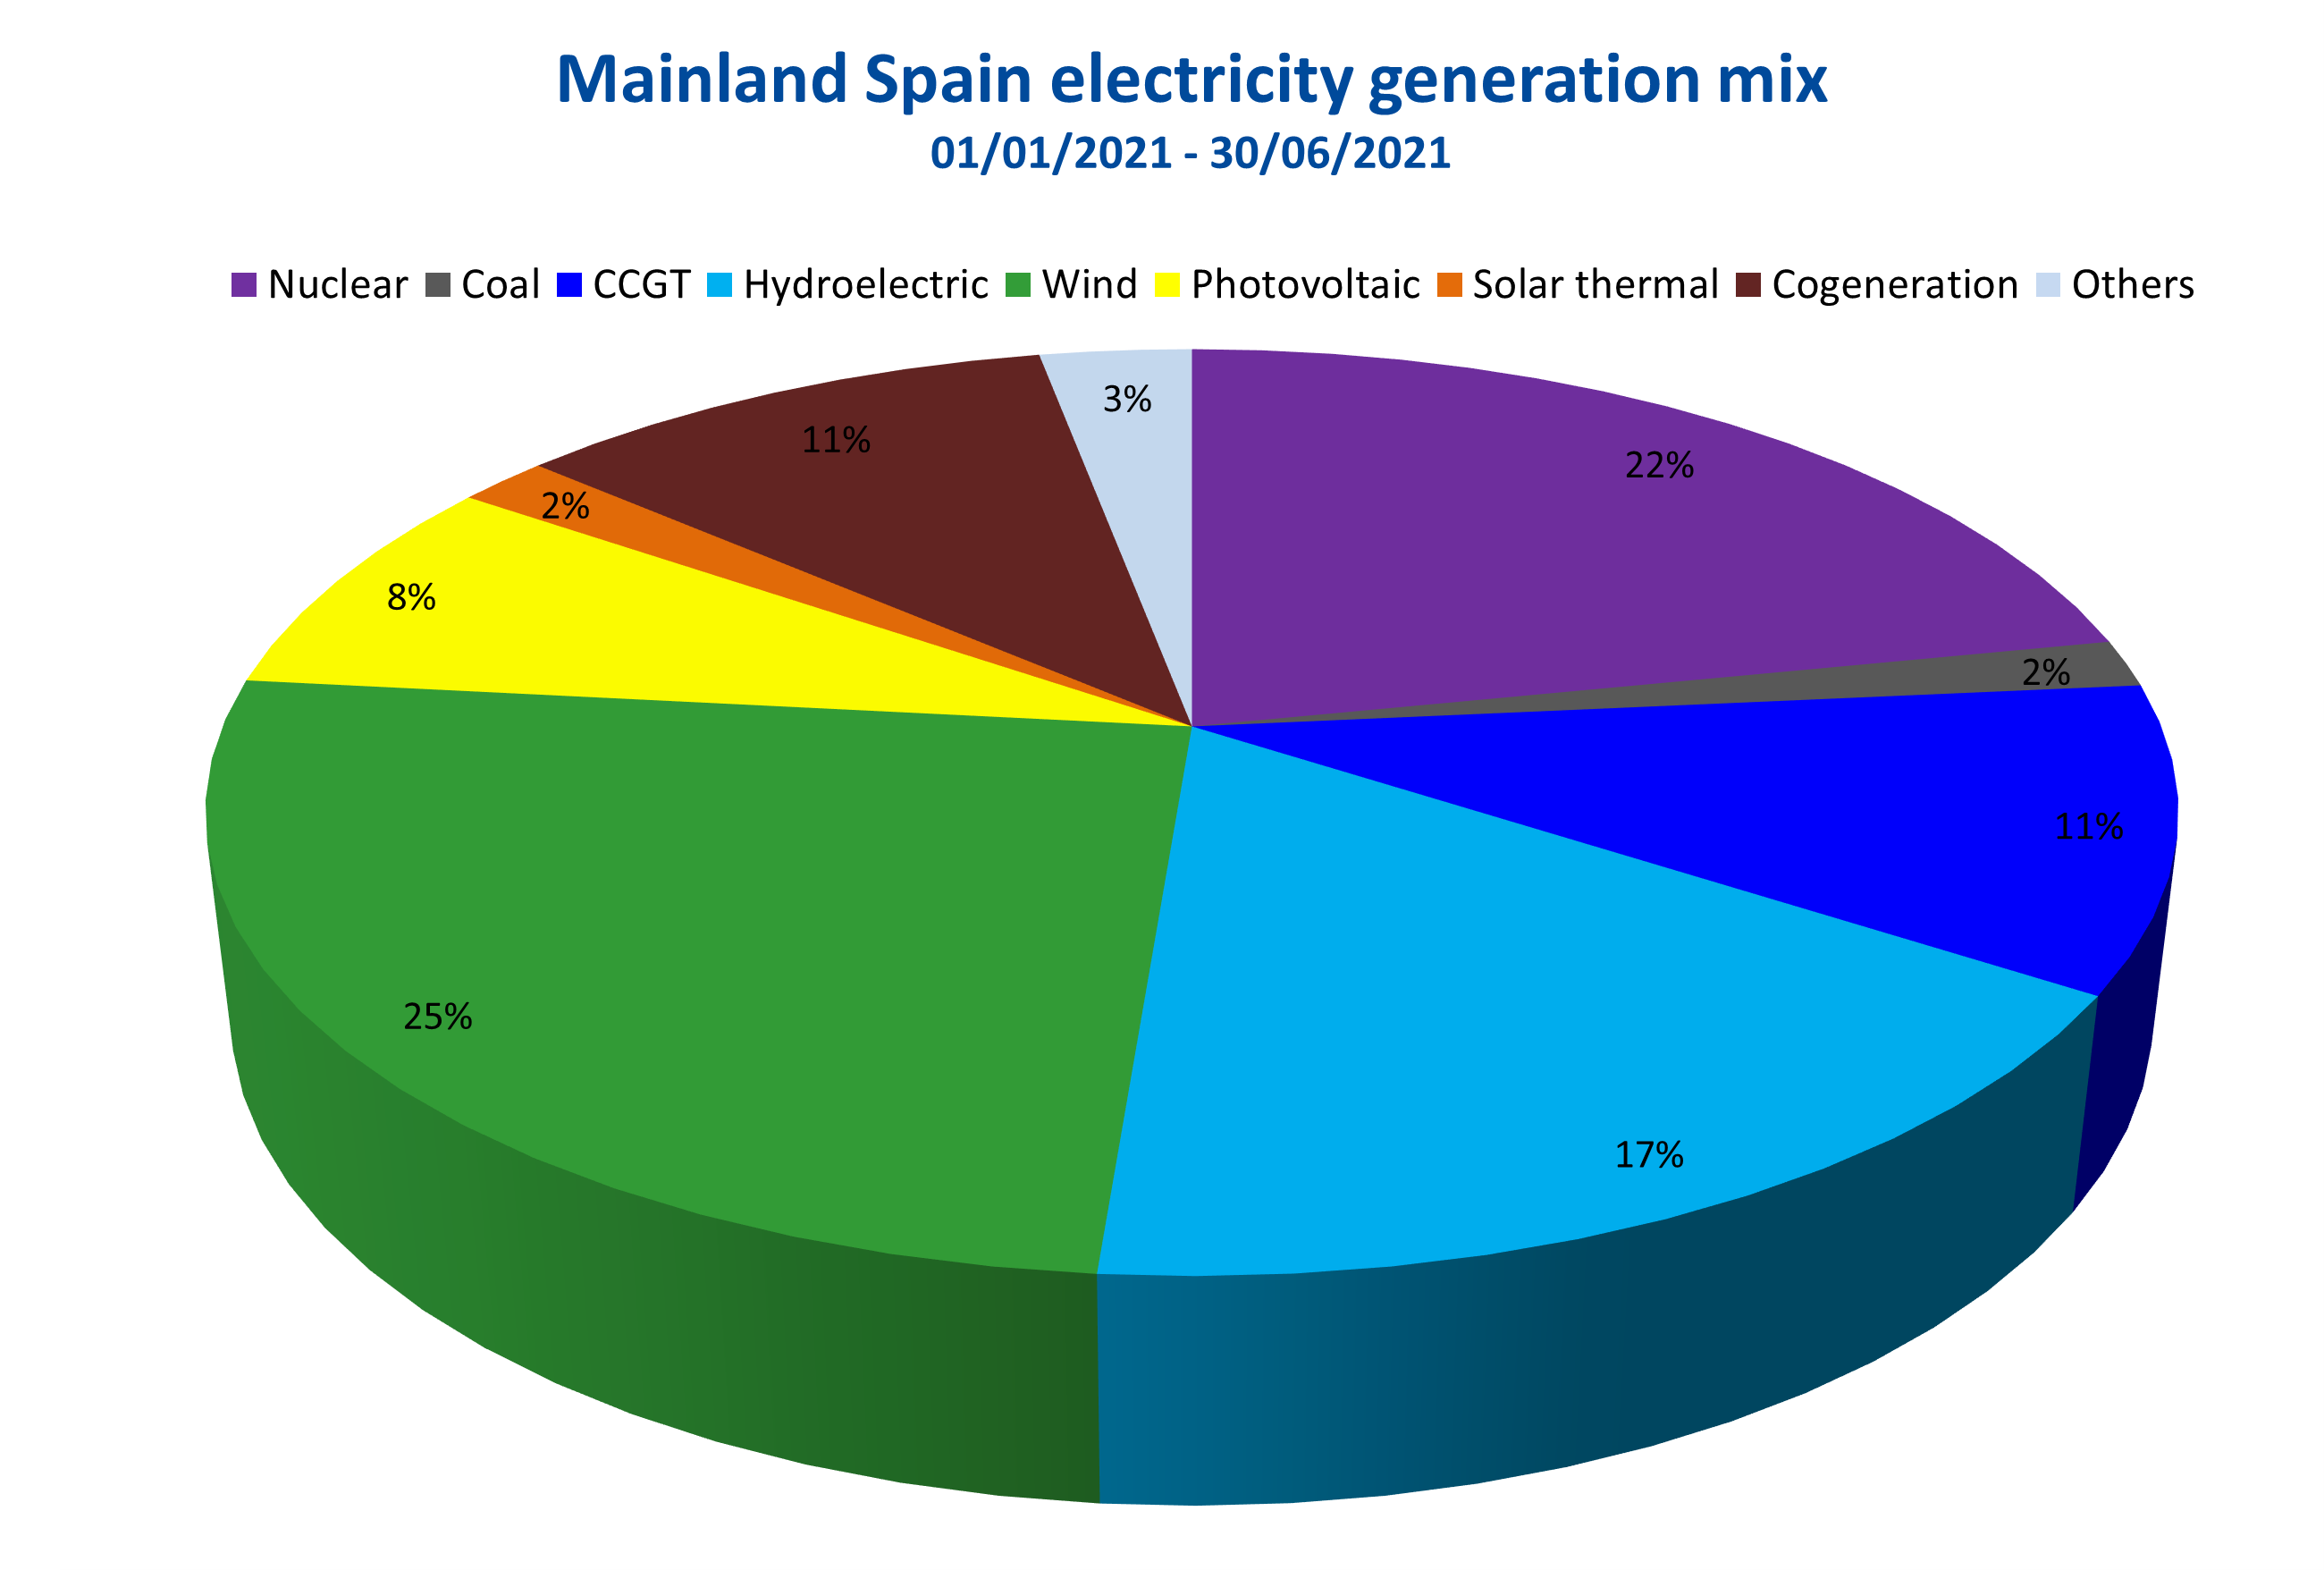 AleaSoft - Generation mix Spain